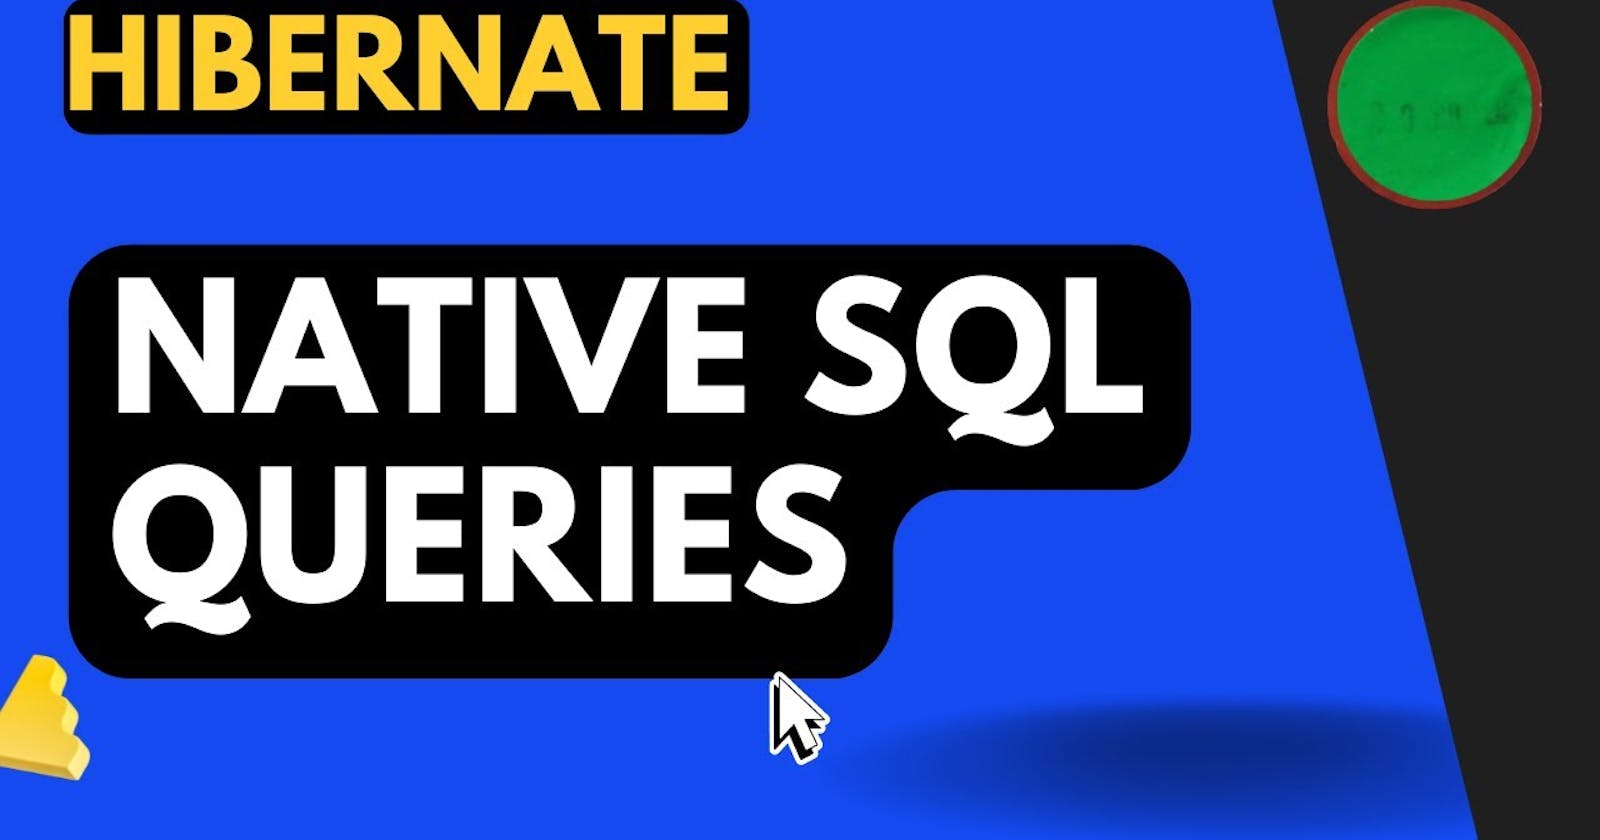 Hibernate Native SQL Query Example